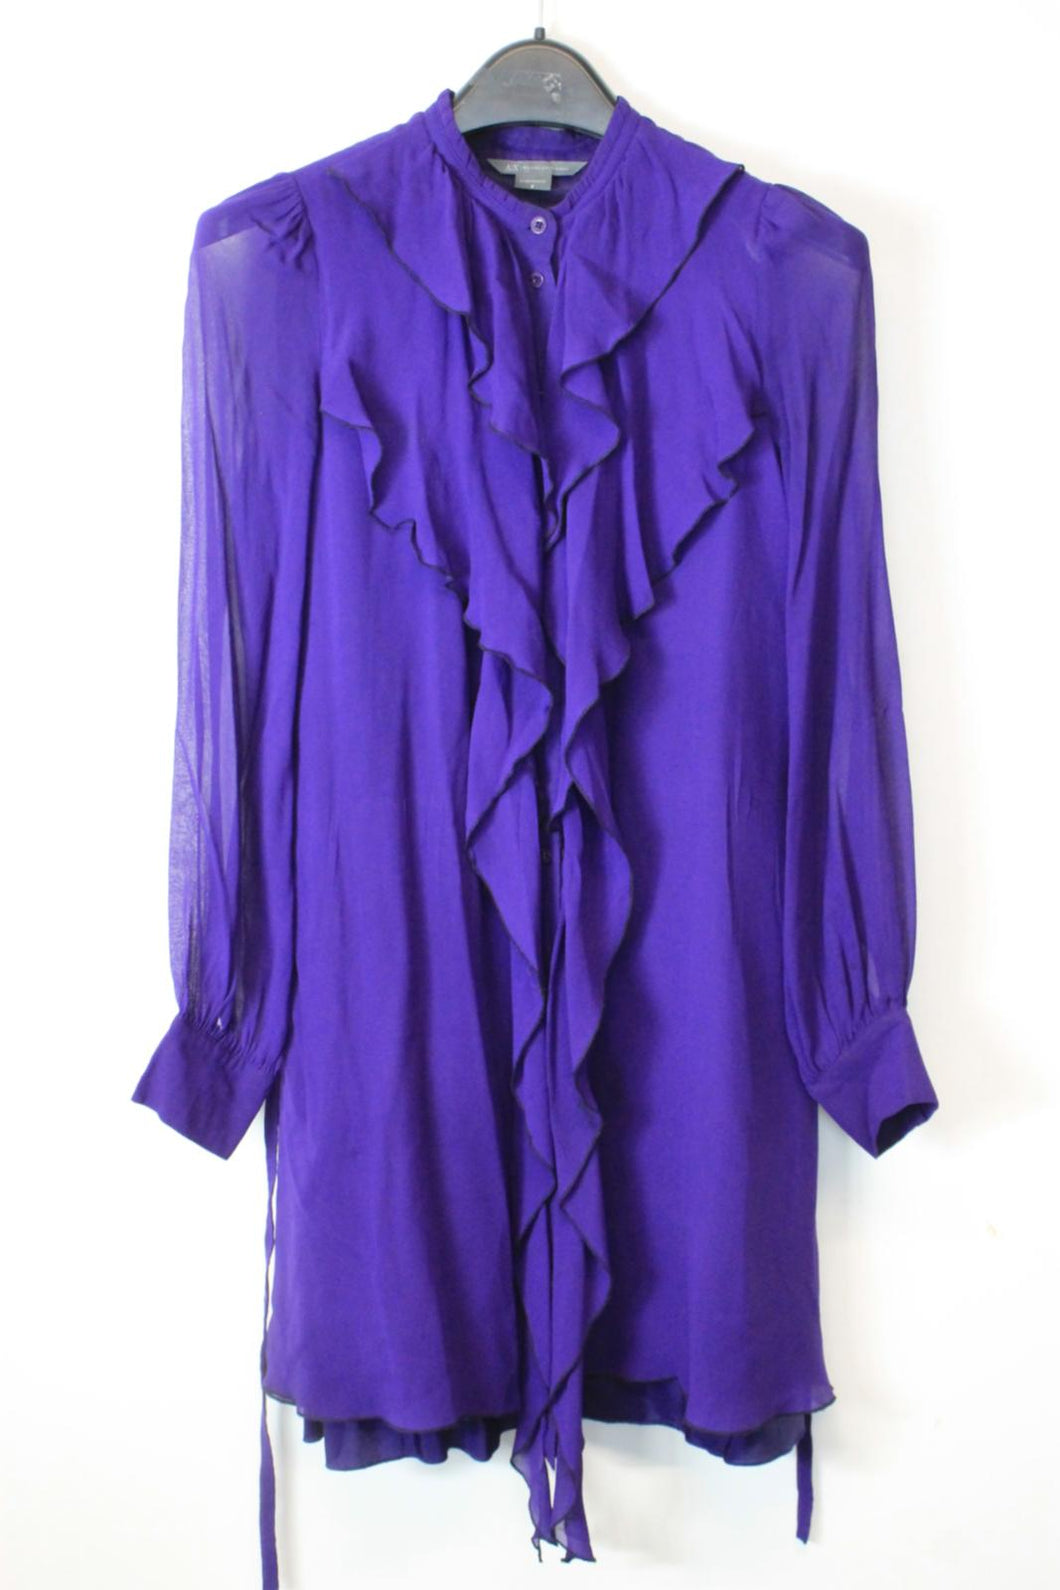 ARMANI EXCHANGE Ladies Purple Short Ruffled Long Sleeve Shirt Dress Size XS